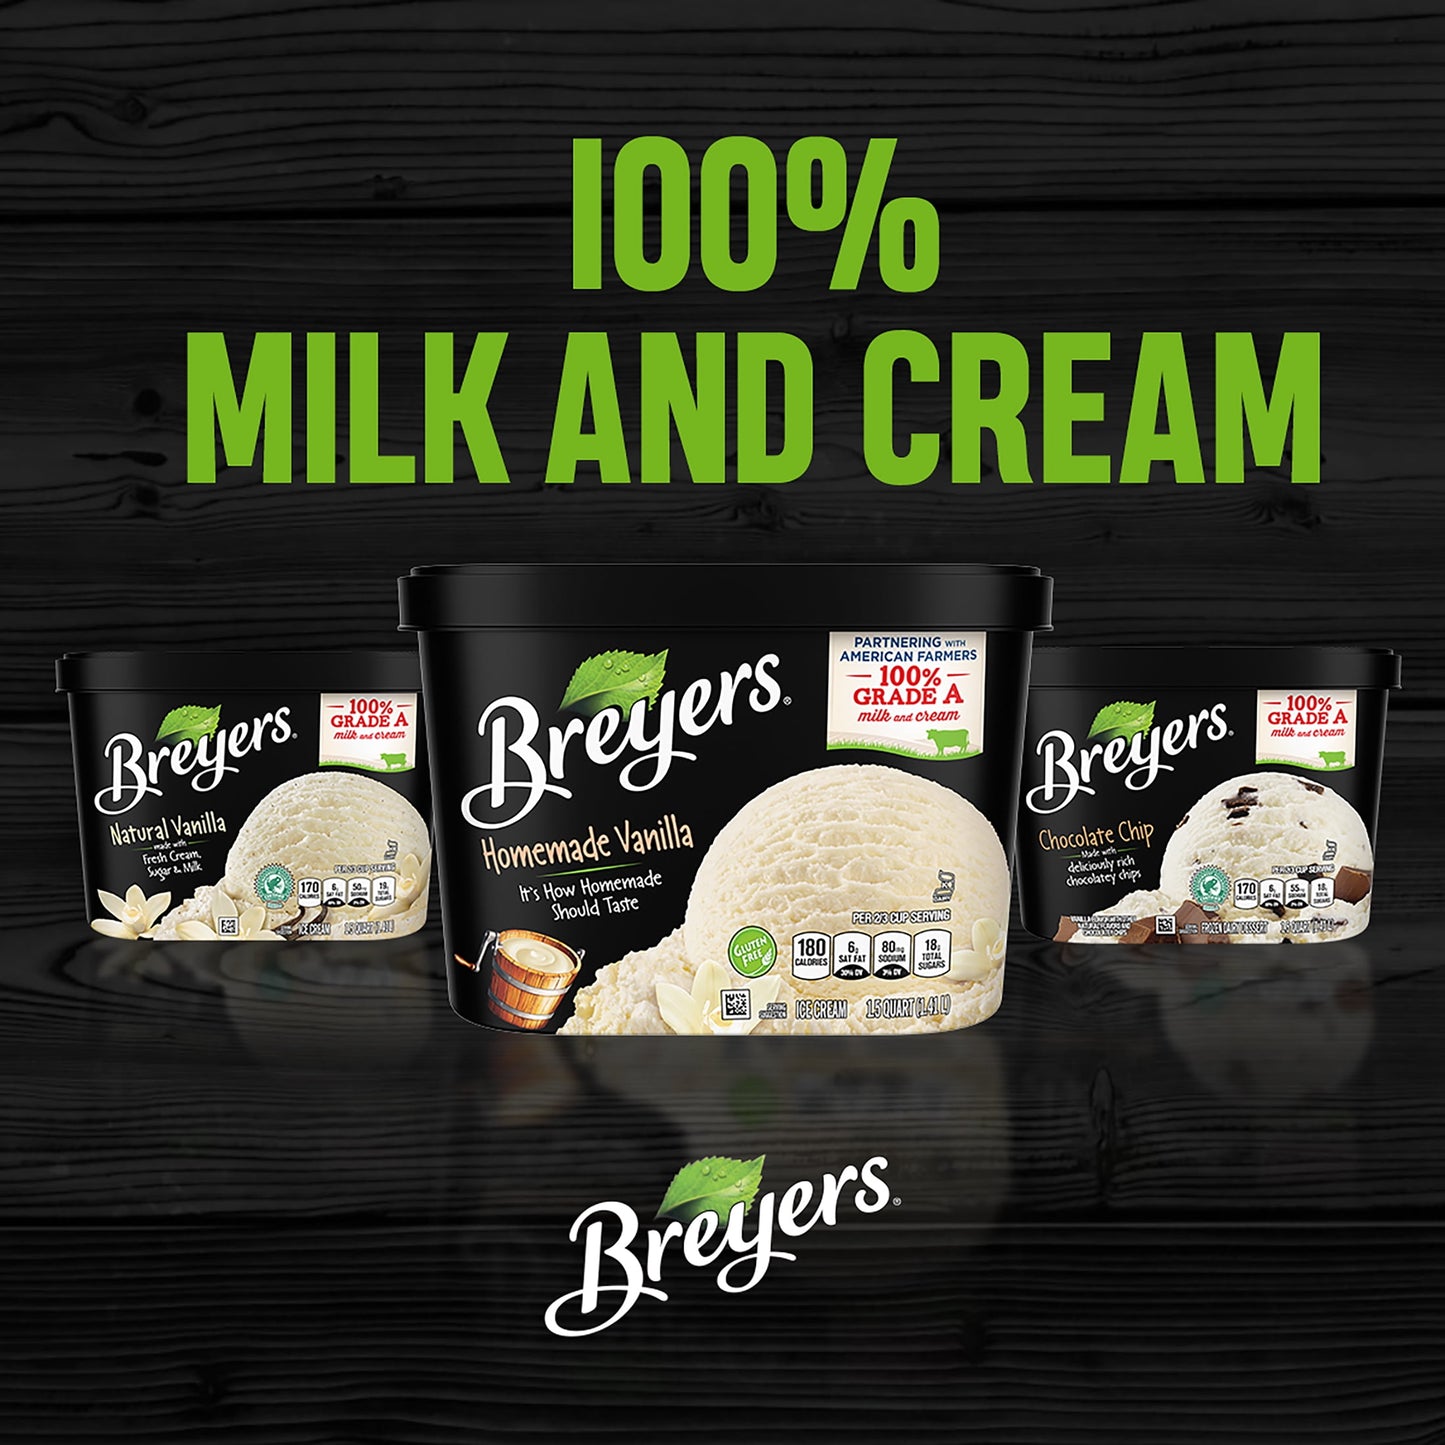 Breyers Gluten Free Homemade Vanilla Ice Cream, 48 oz